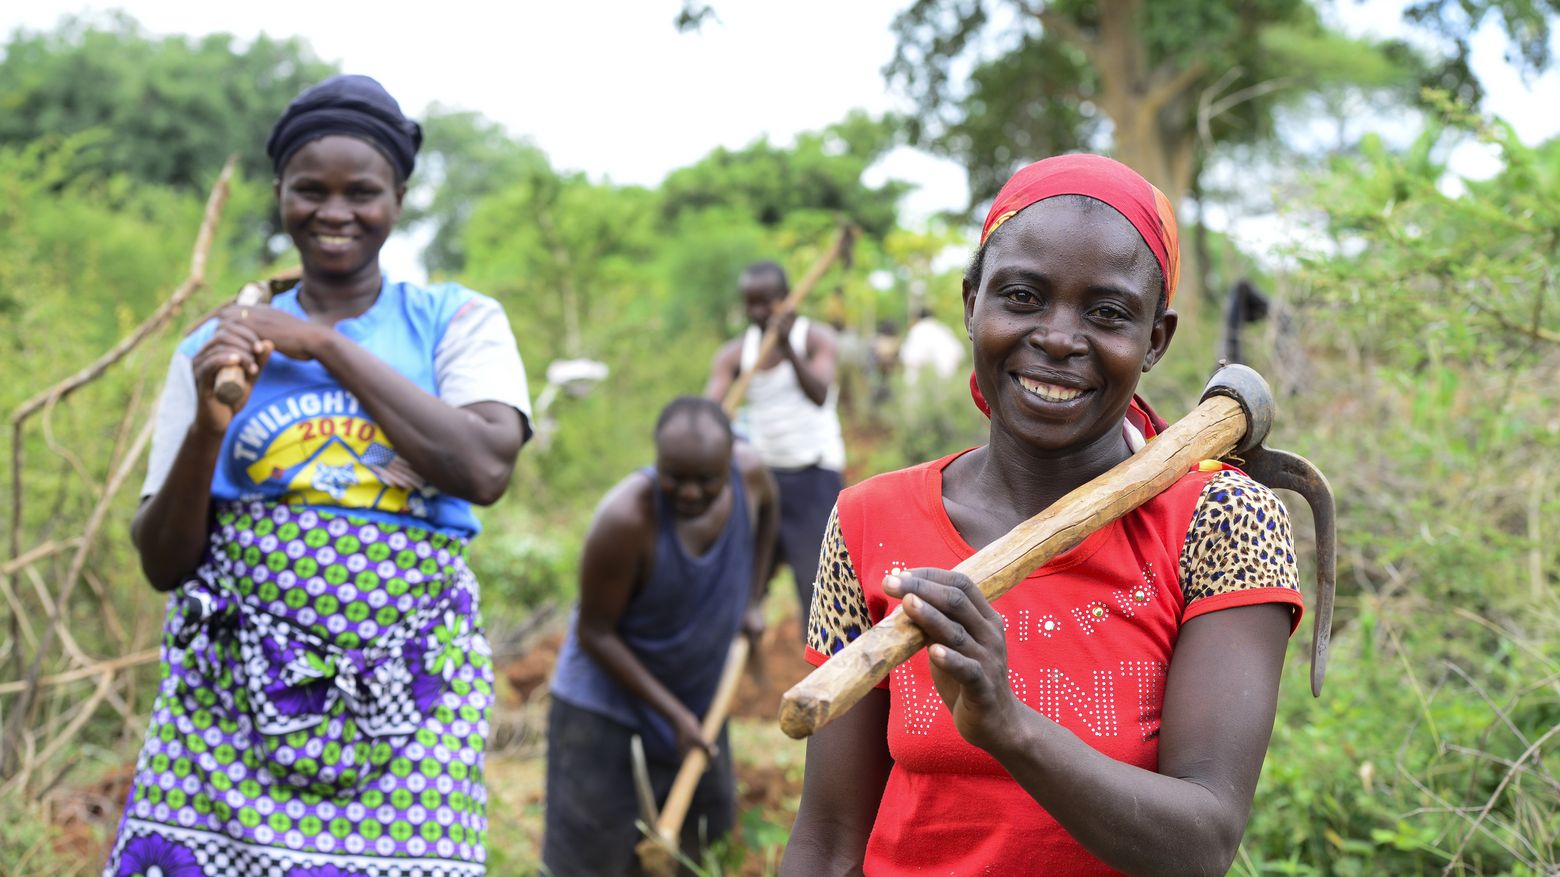 Rural women and men in Kenya digging an irrigation channel